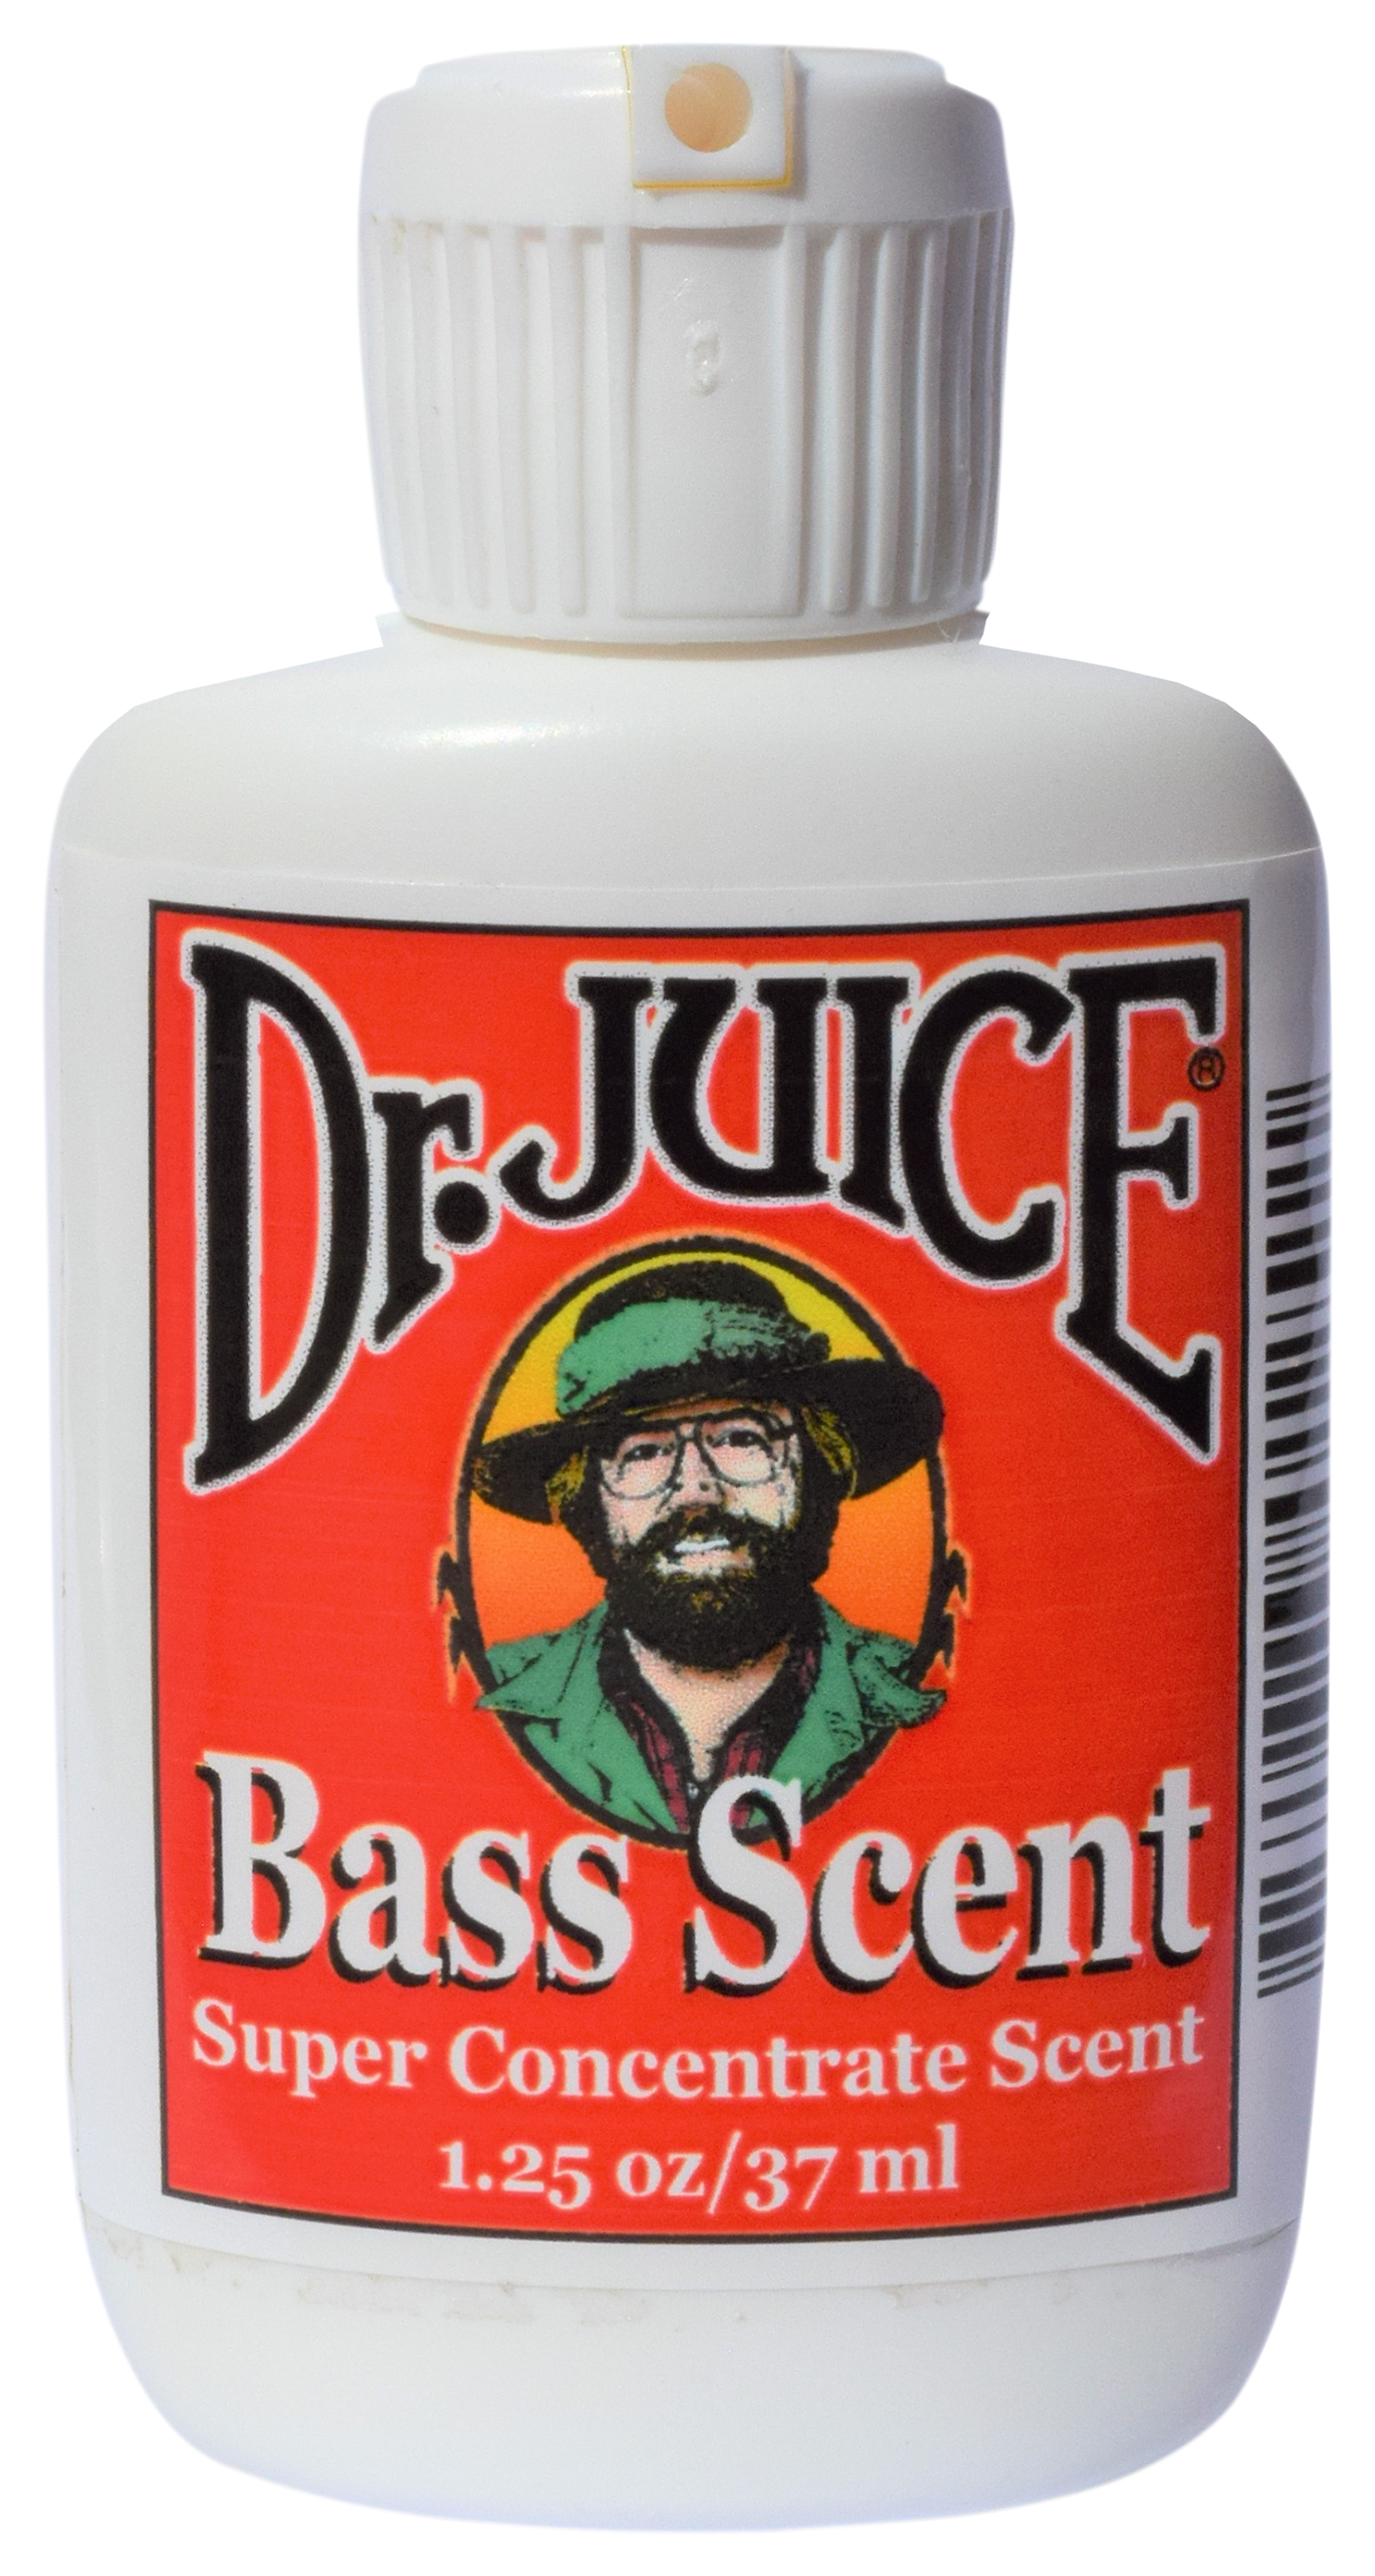 Dr Juice Tournament Spray Fishing Scent 4oz